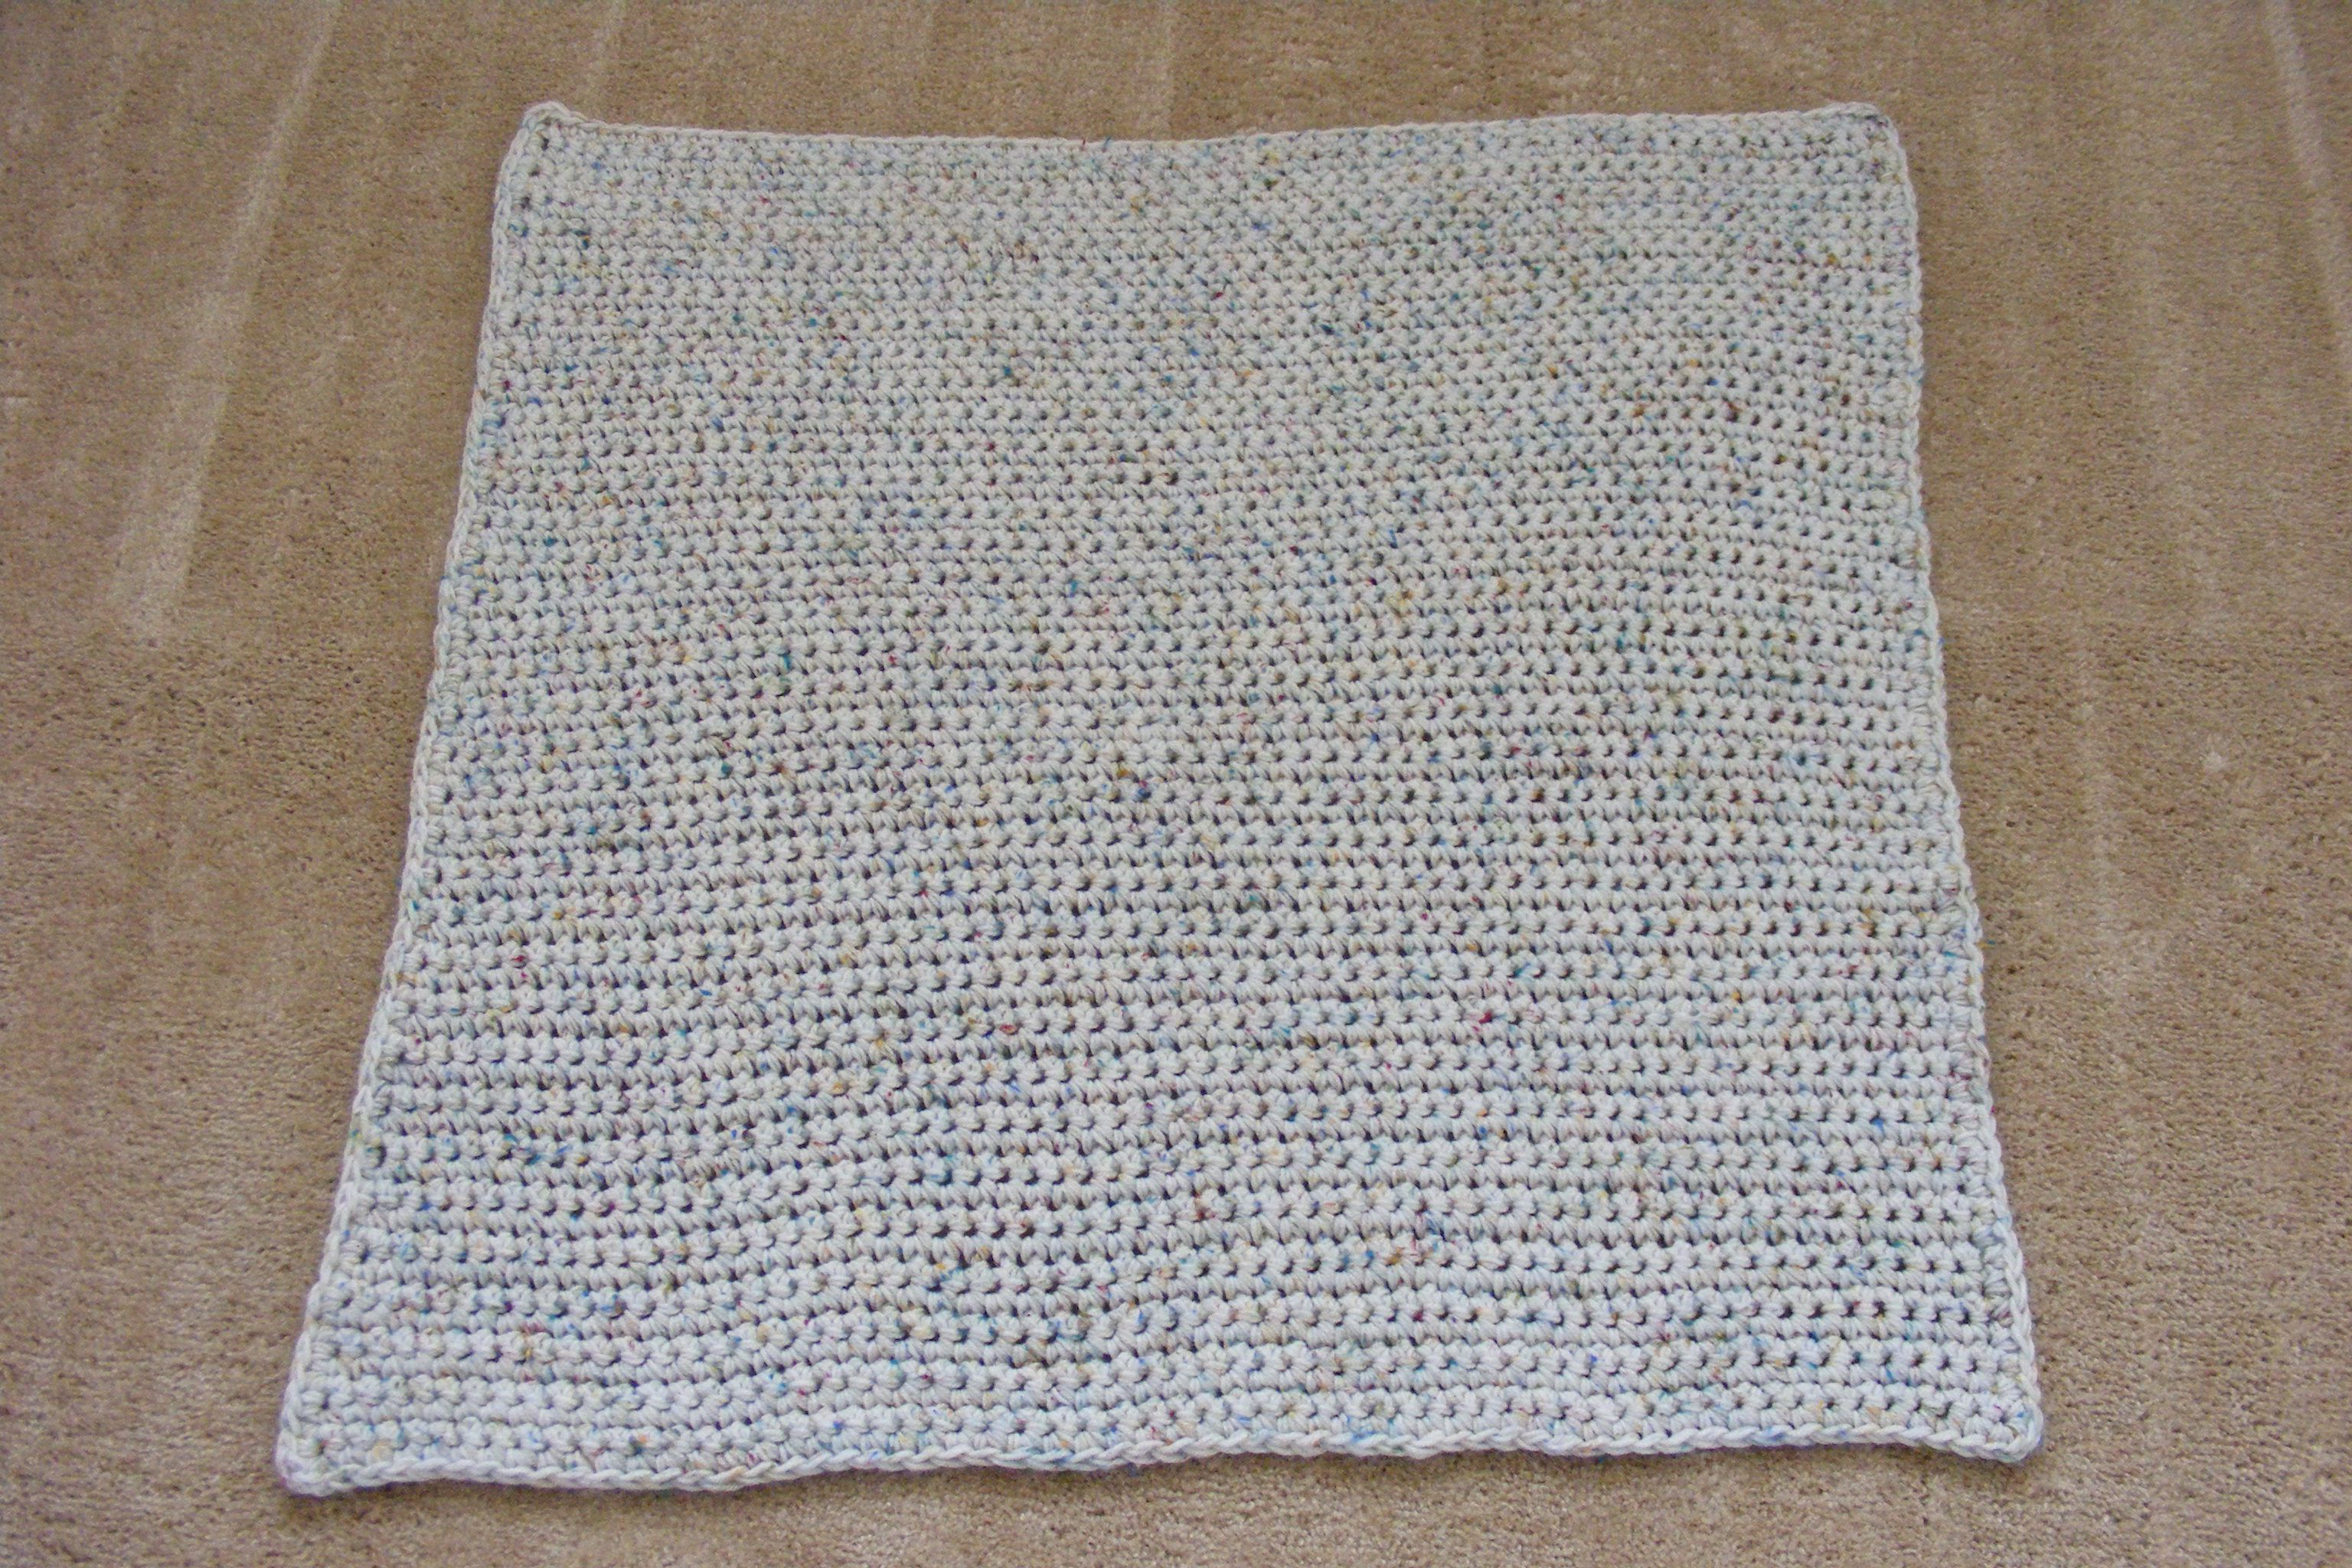 Free Crochet Baby Patterns 15 Adorable Crochet Ba Blanket Patterns